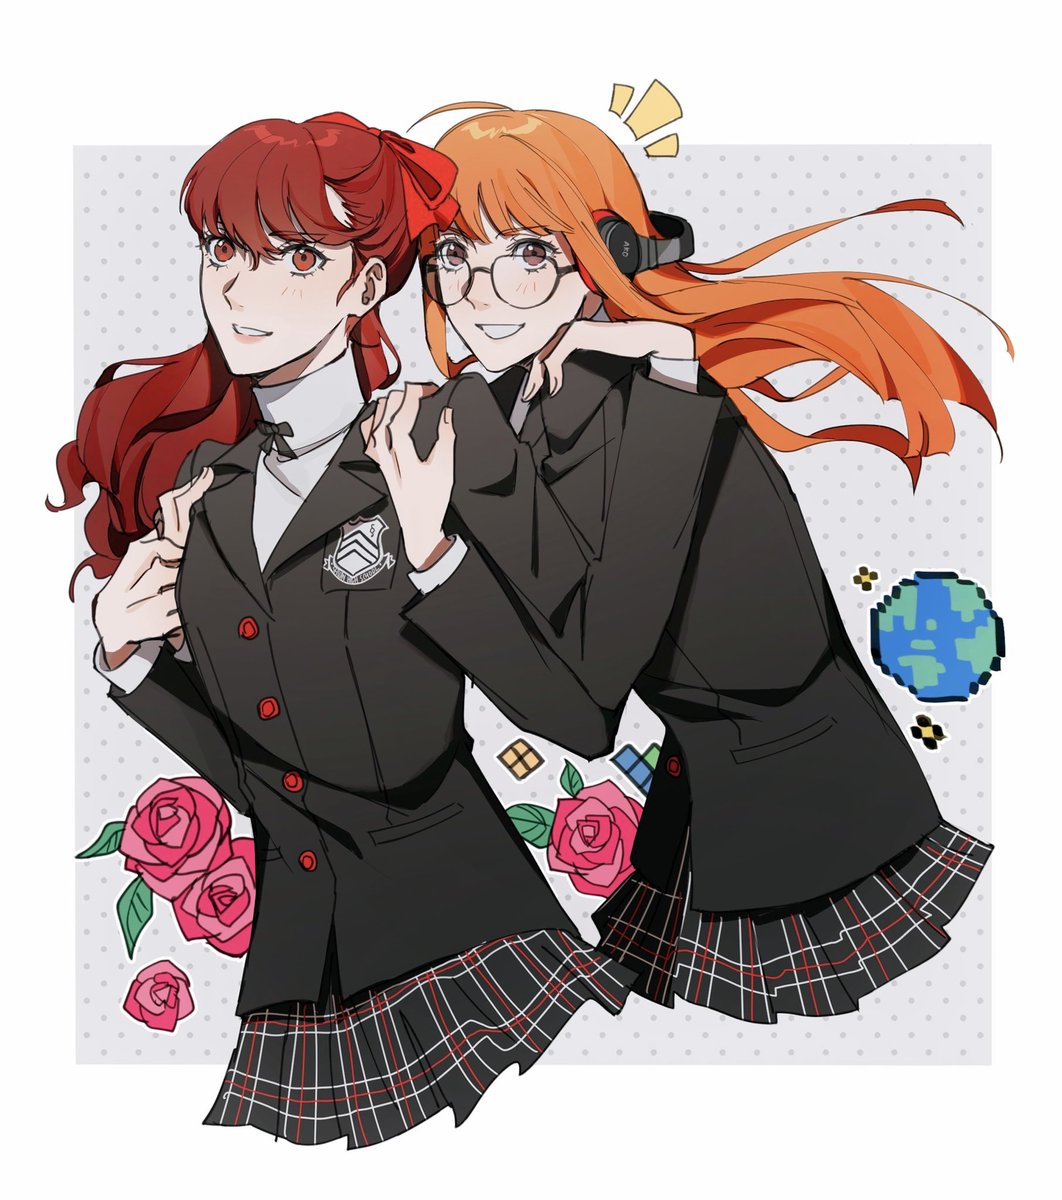 sakura futaba shuujin academy school uniform multiple girls 2girls school uniform glasses orange hair jacket  illustration images